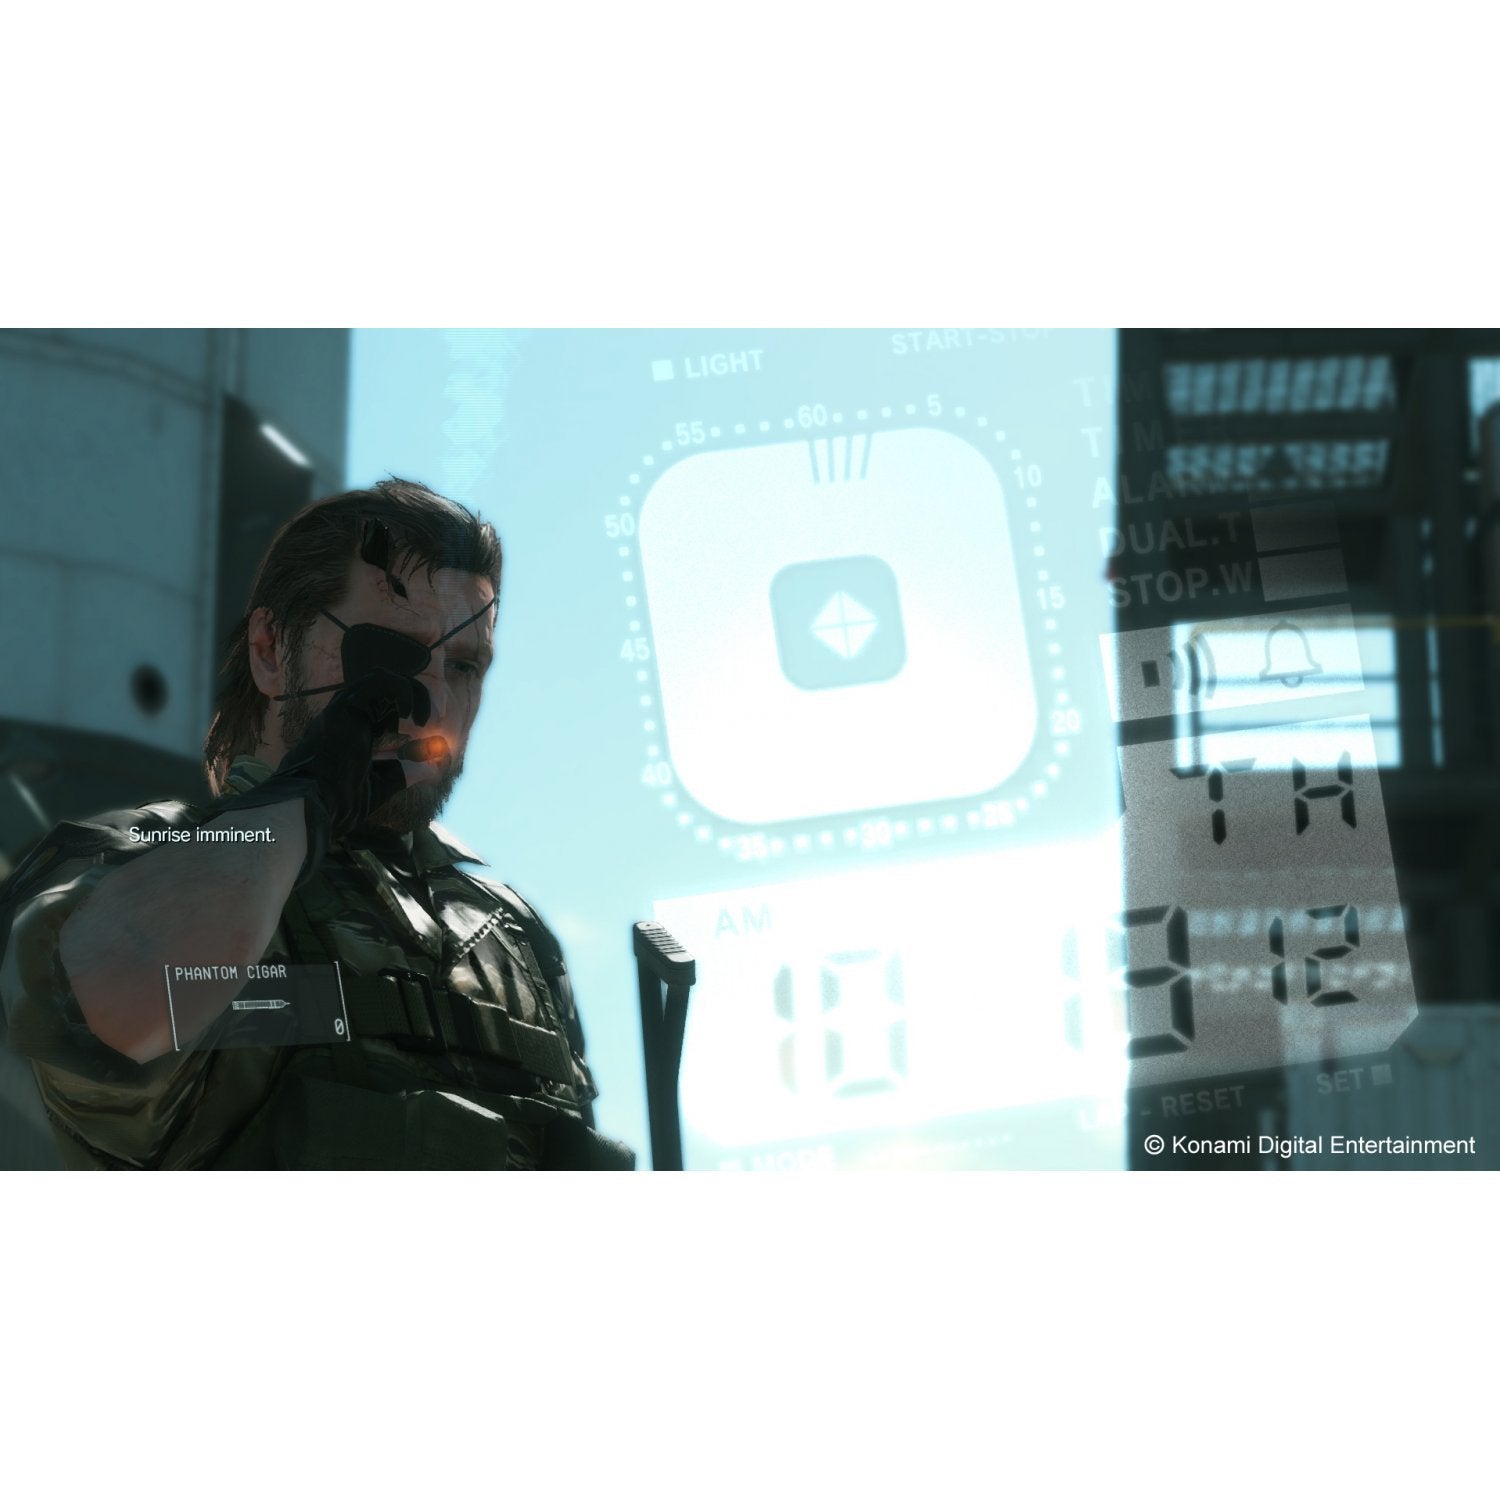 Metal Gear Solid V: The Phantom Pain Premium Package - (PS4) PlayStation 4 ( Japanese Import ) Video Games Konami   